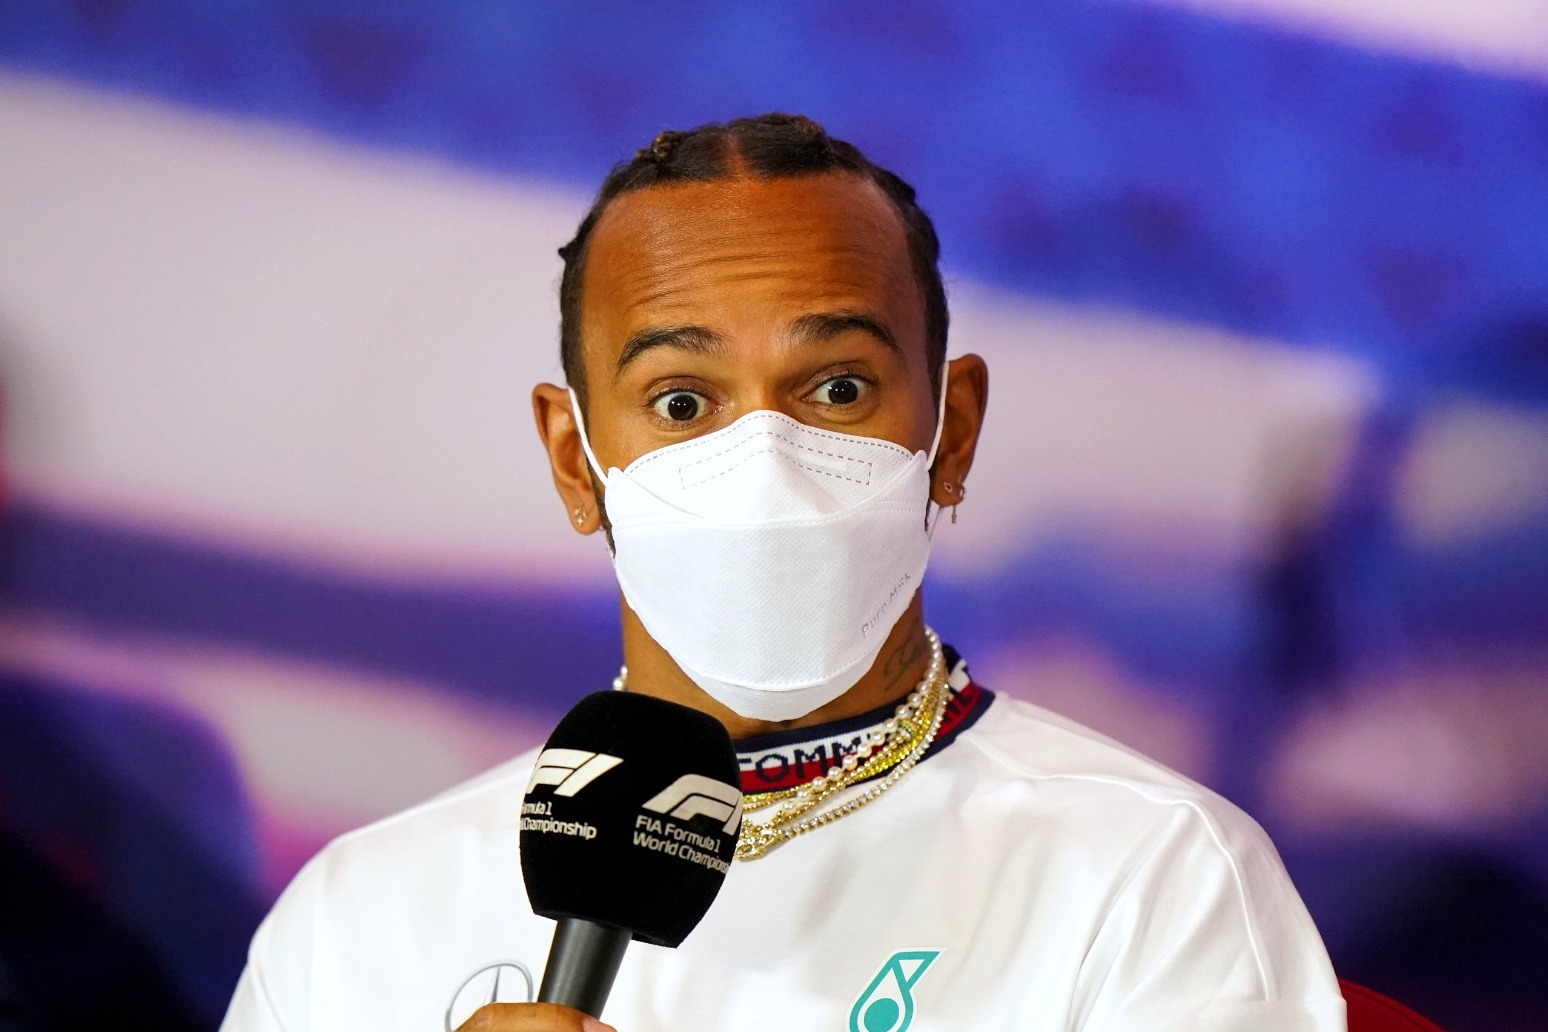 Lewis Hamilton queries role of older voices in F1 after Nelson Piquet comment